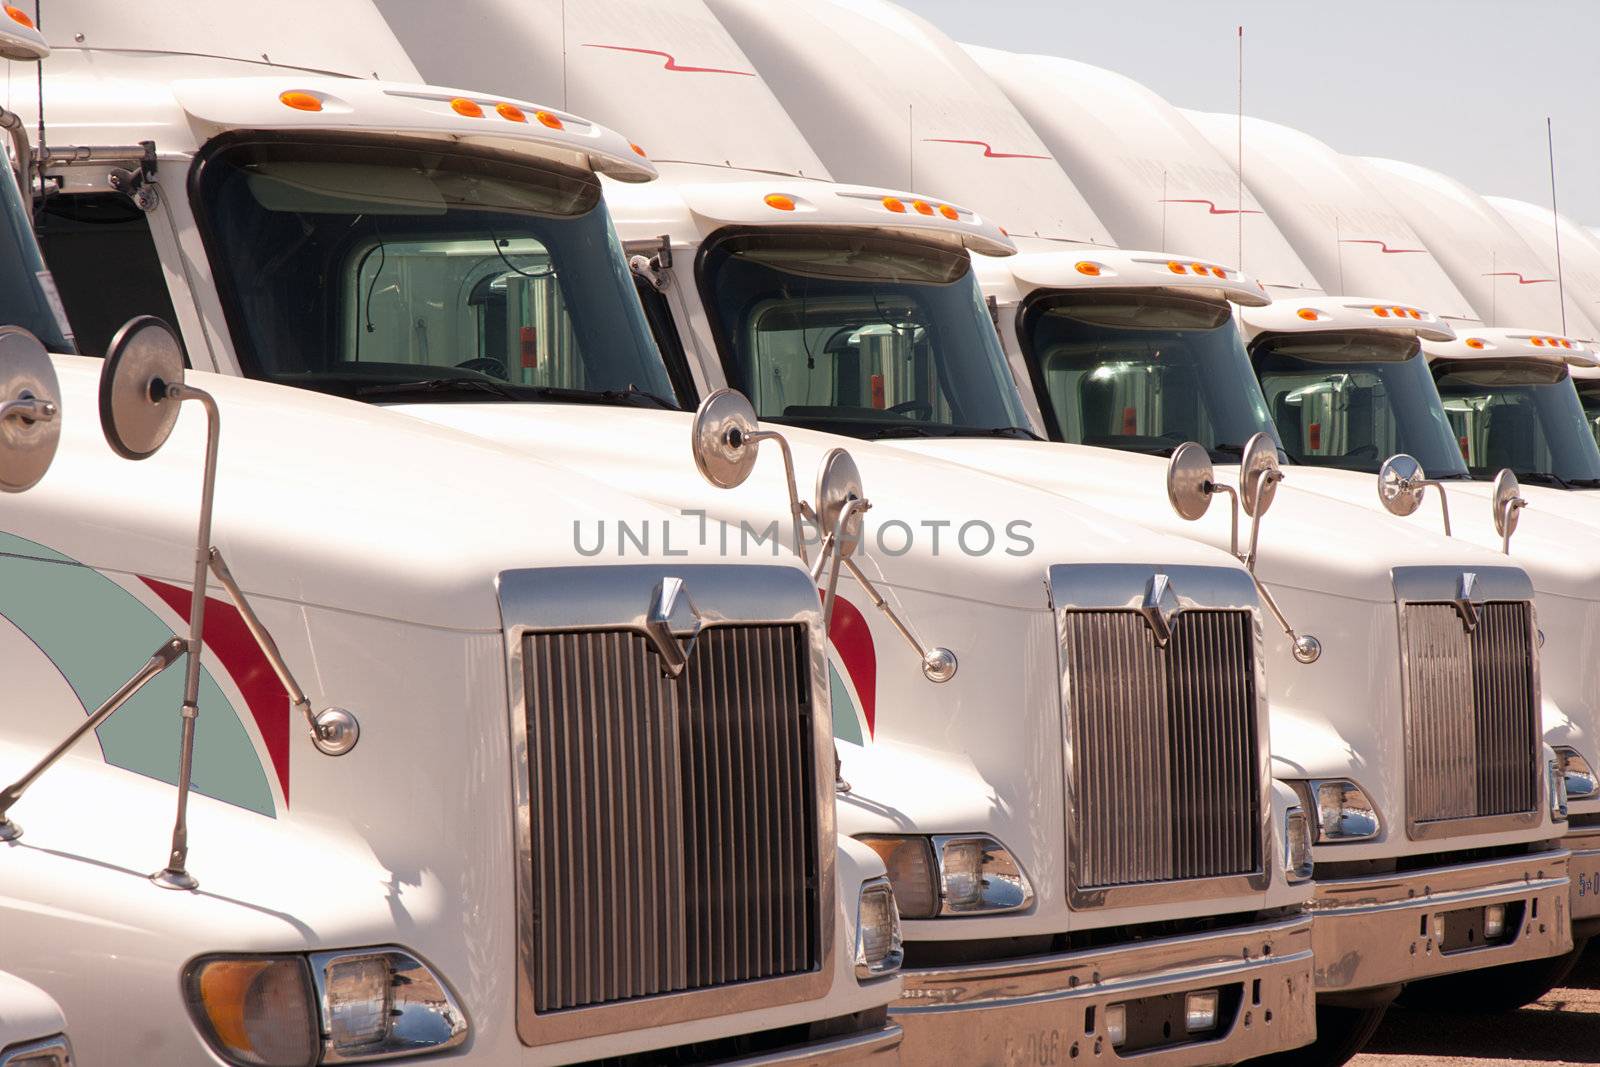 Semi truck fleet lined up in a row